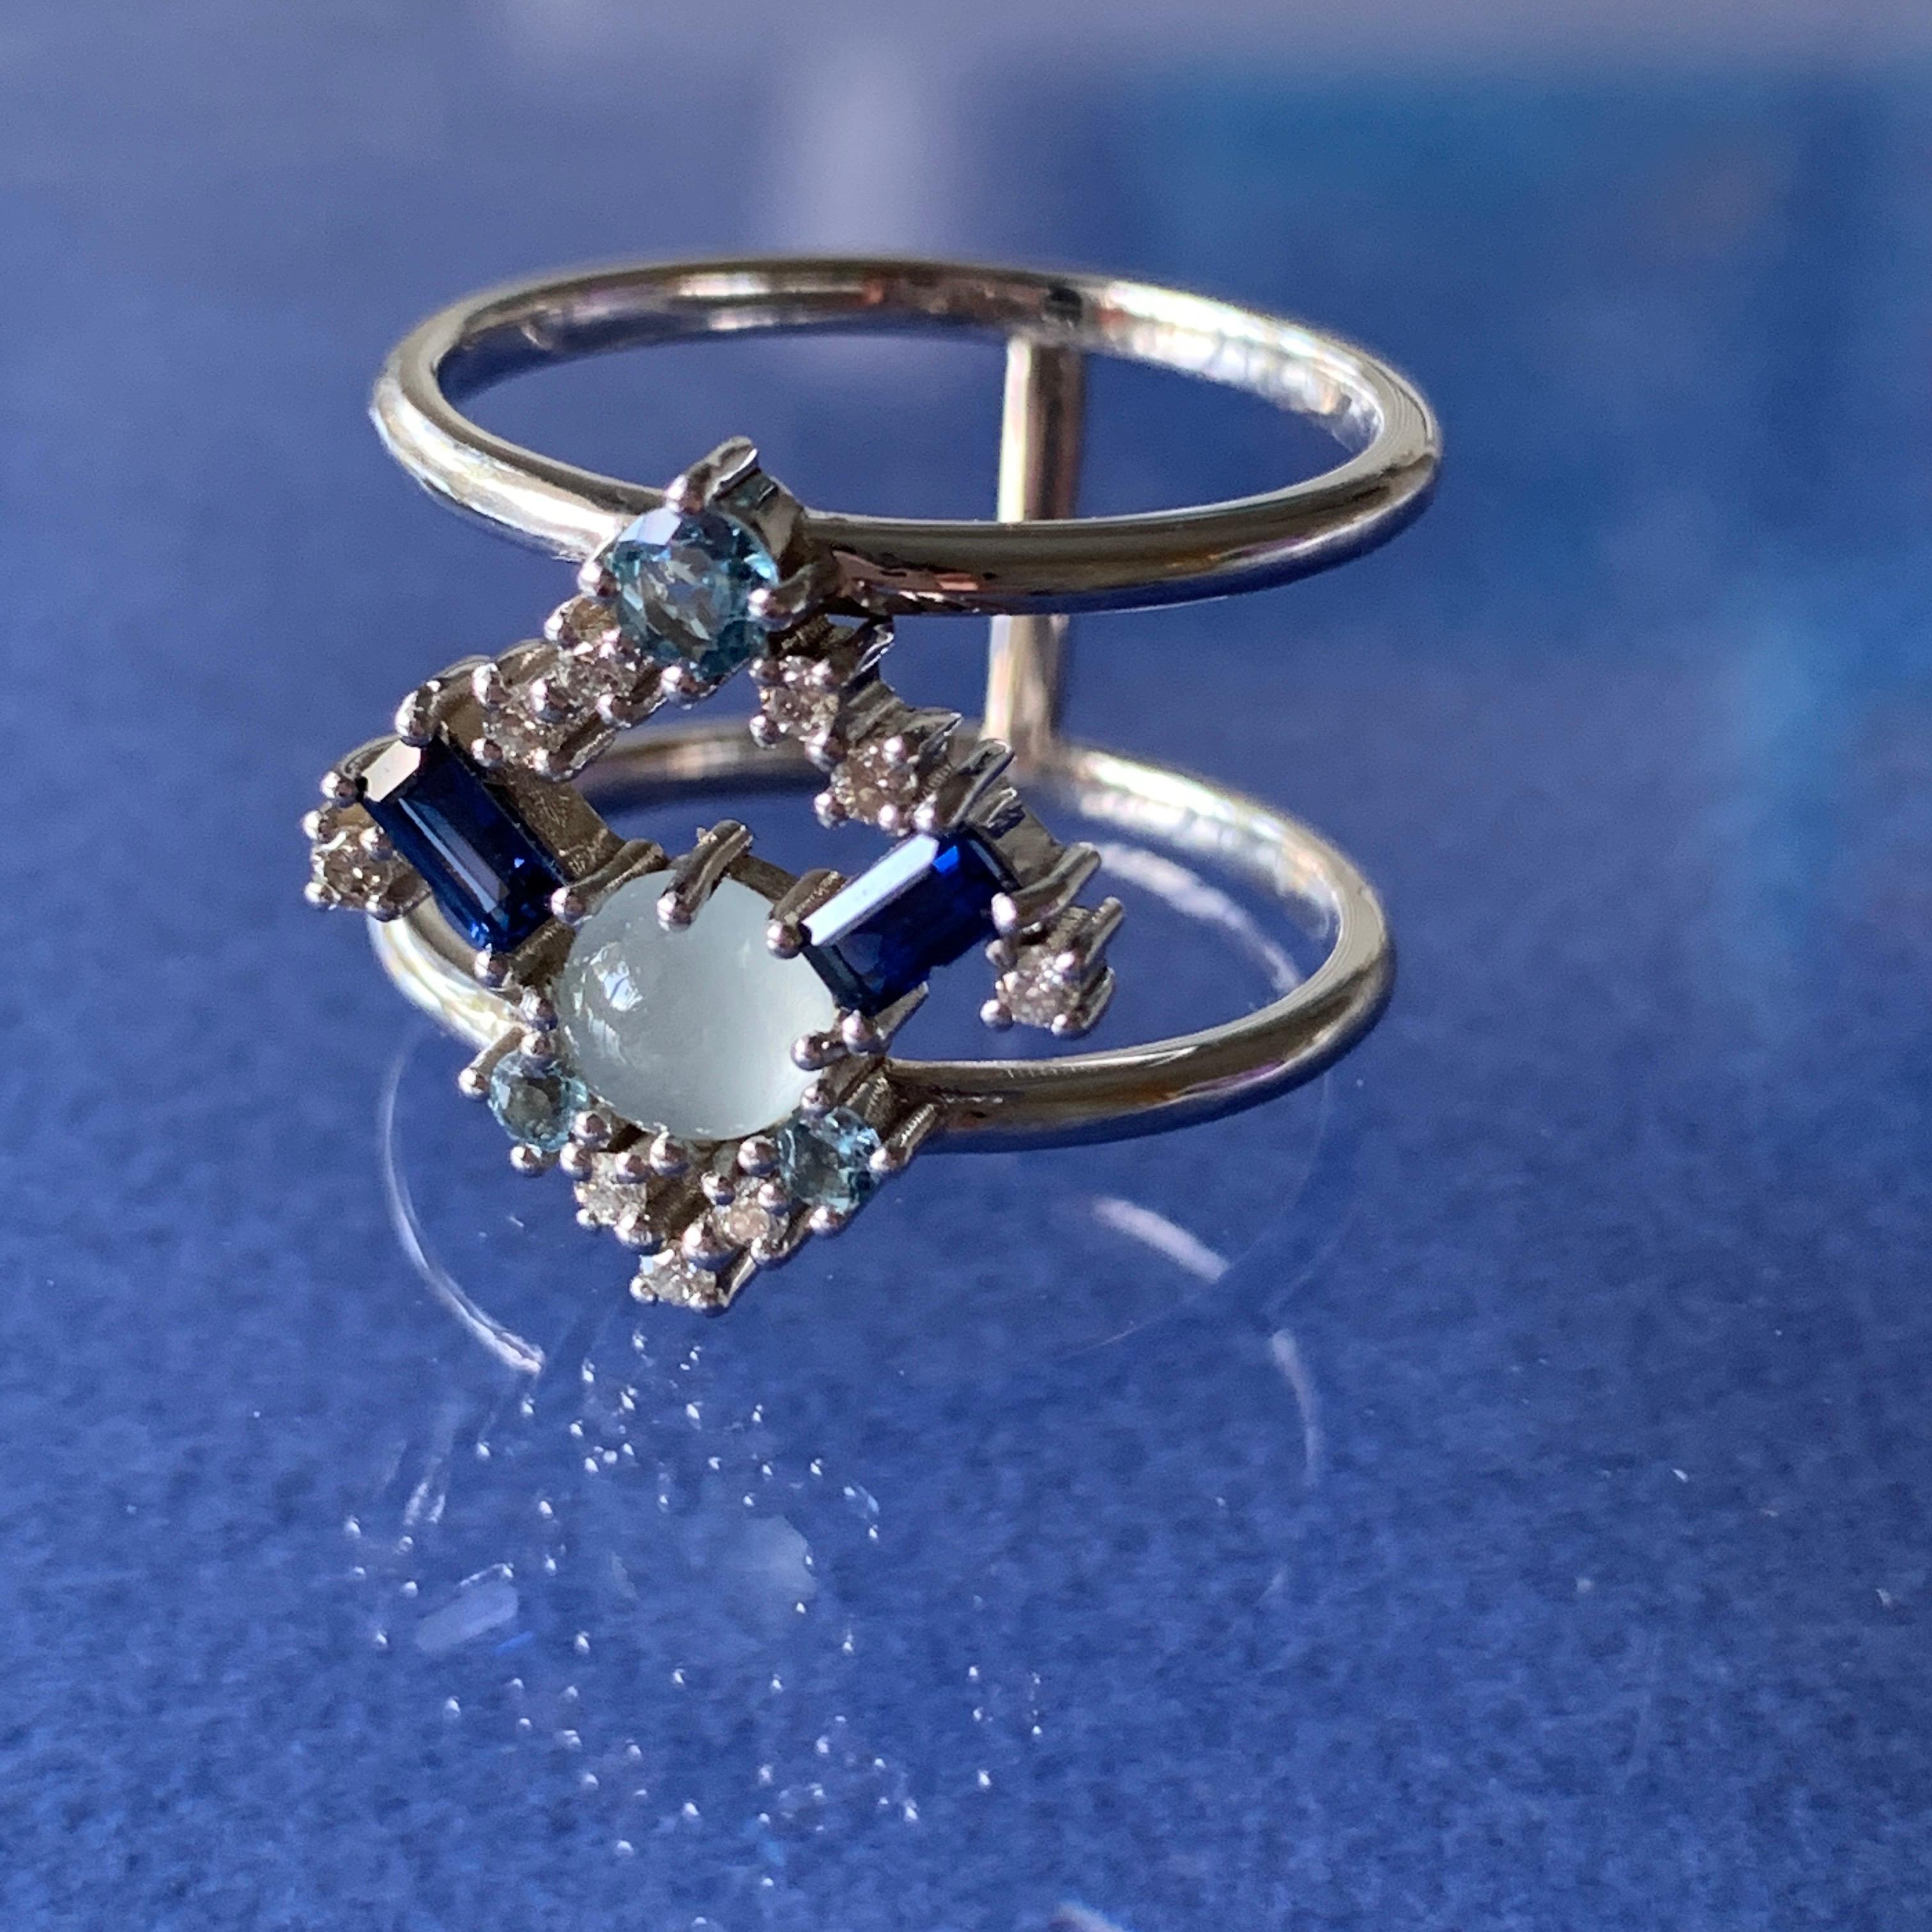 Women's Colorful 18 Karat Gold Ring with Diamonds, Sapphires, Aquamarines